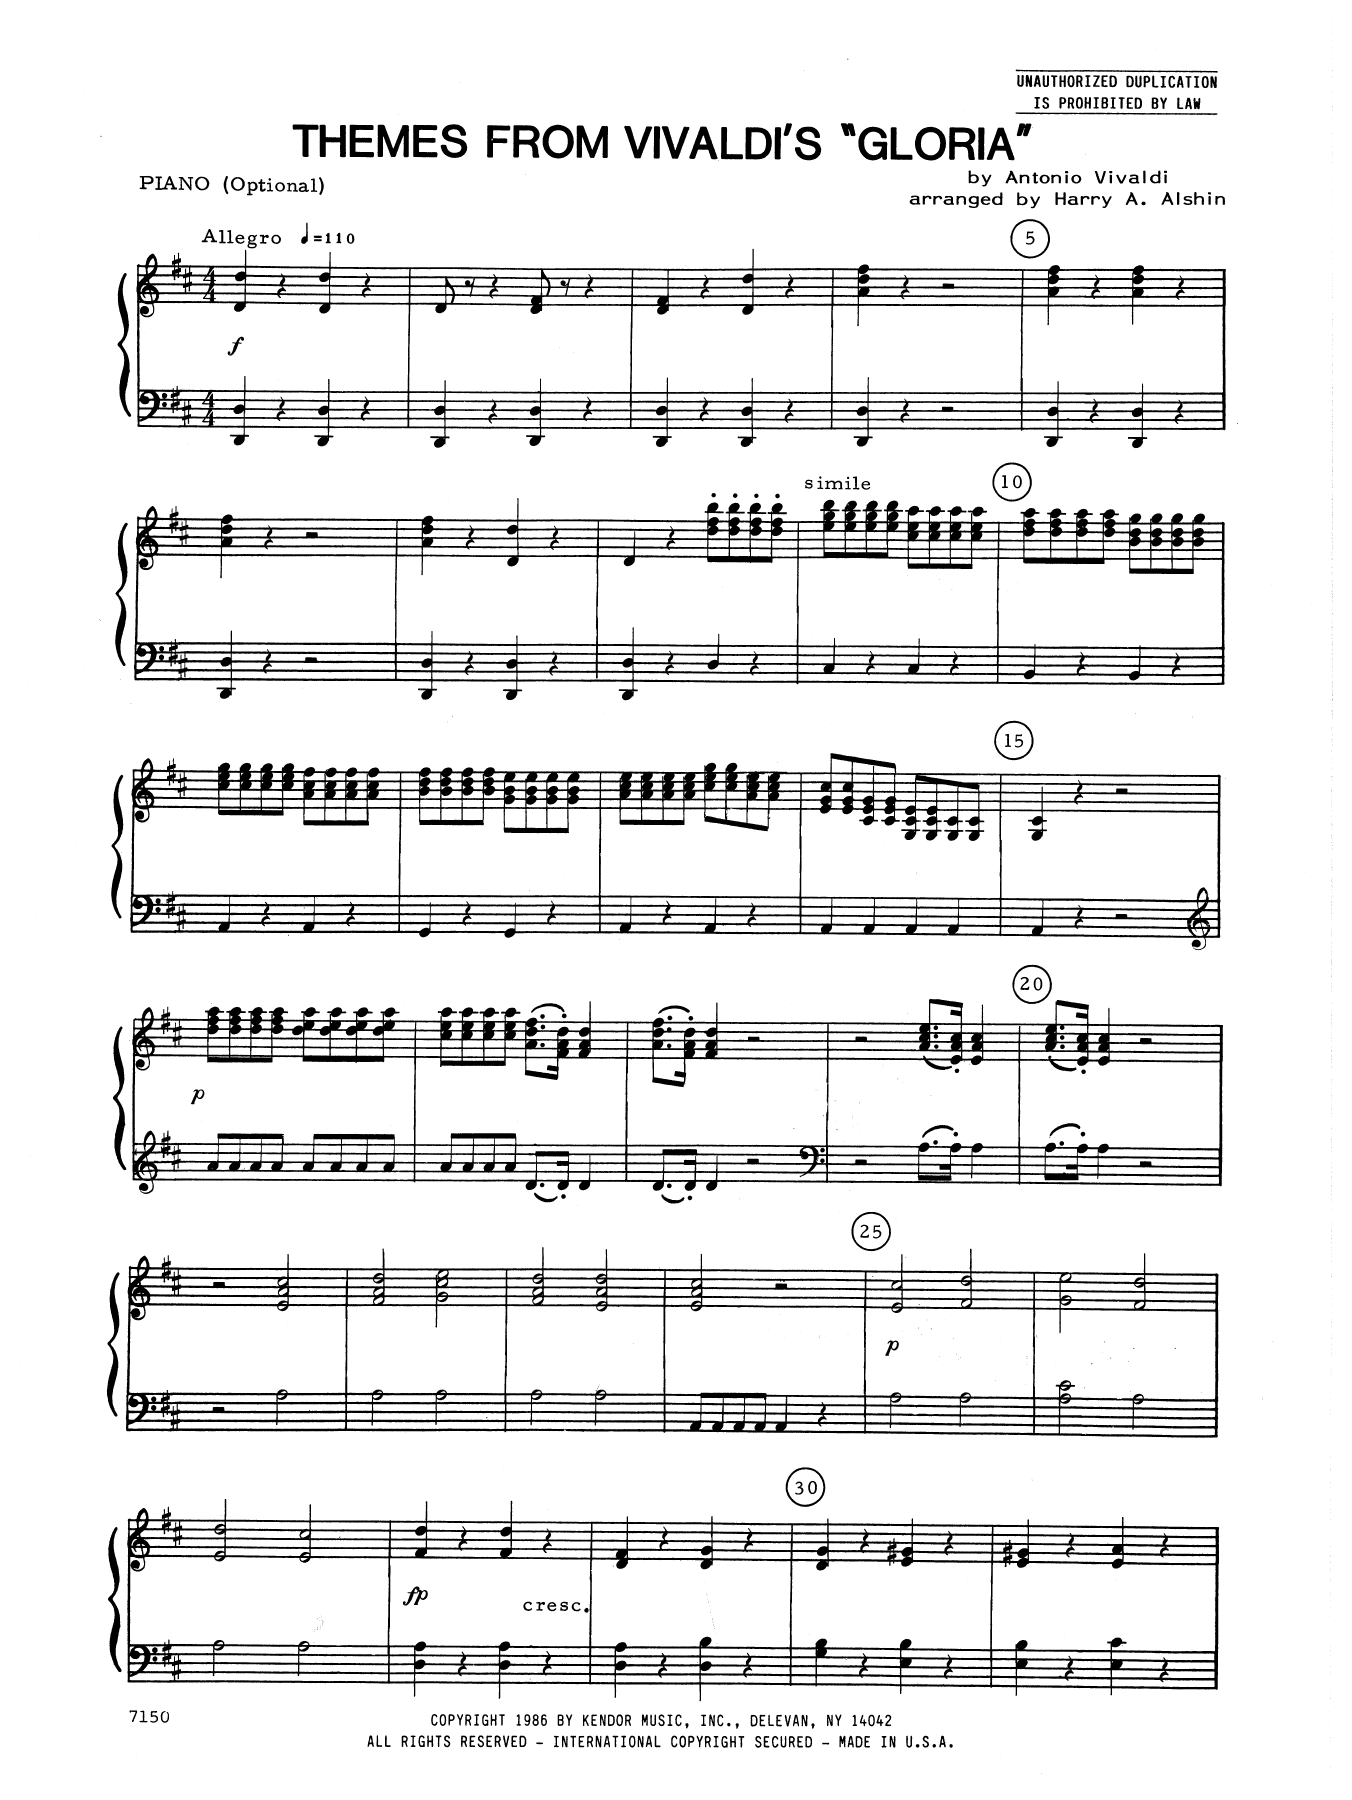 Download Alshin Themes From Vivaldi's Gloria - Piano Ac Sheet Music